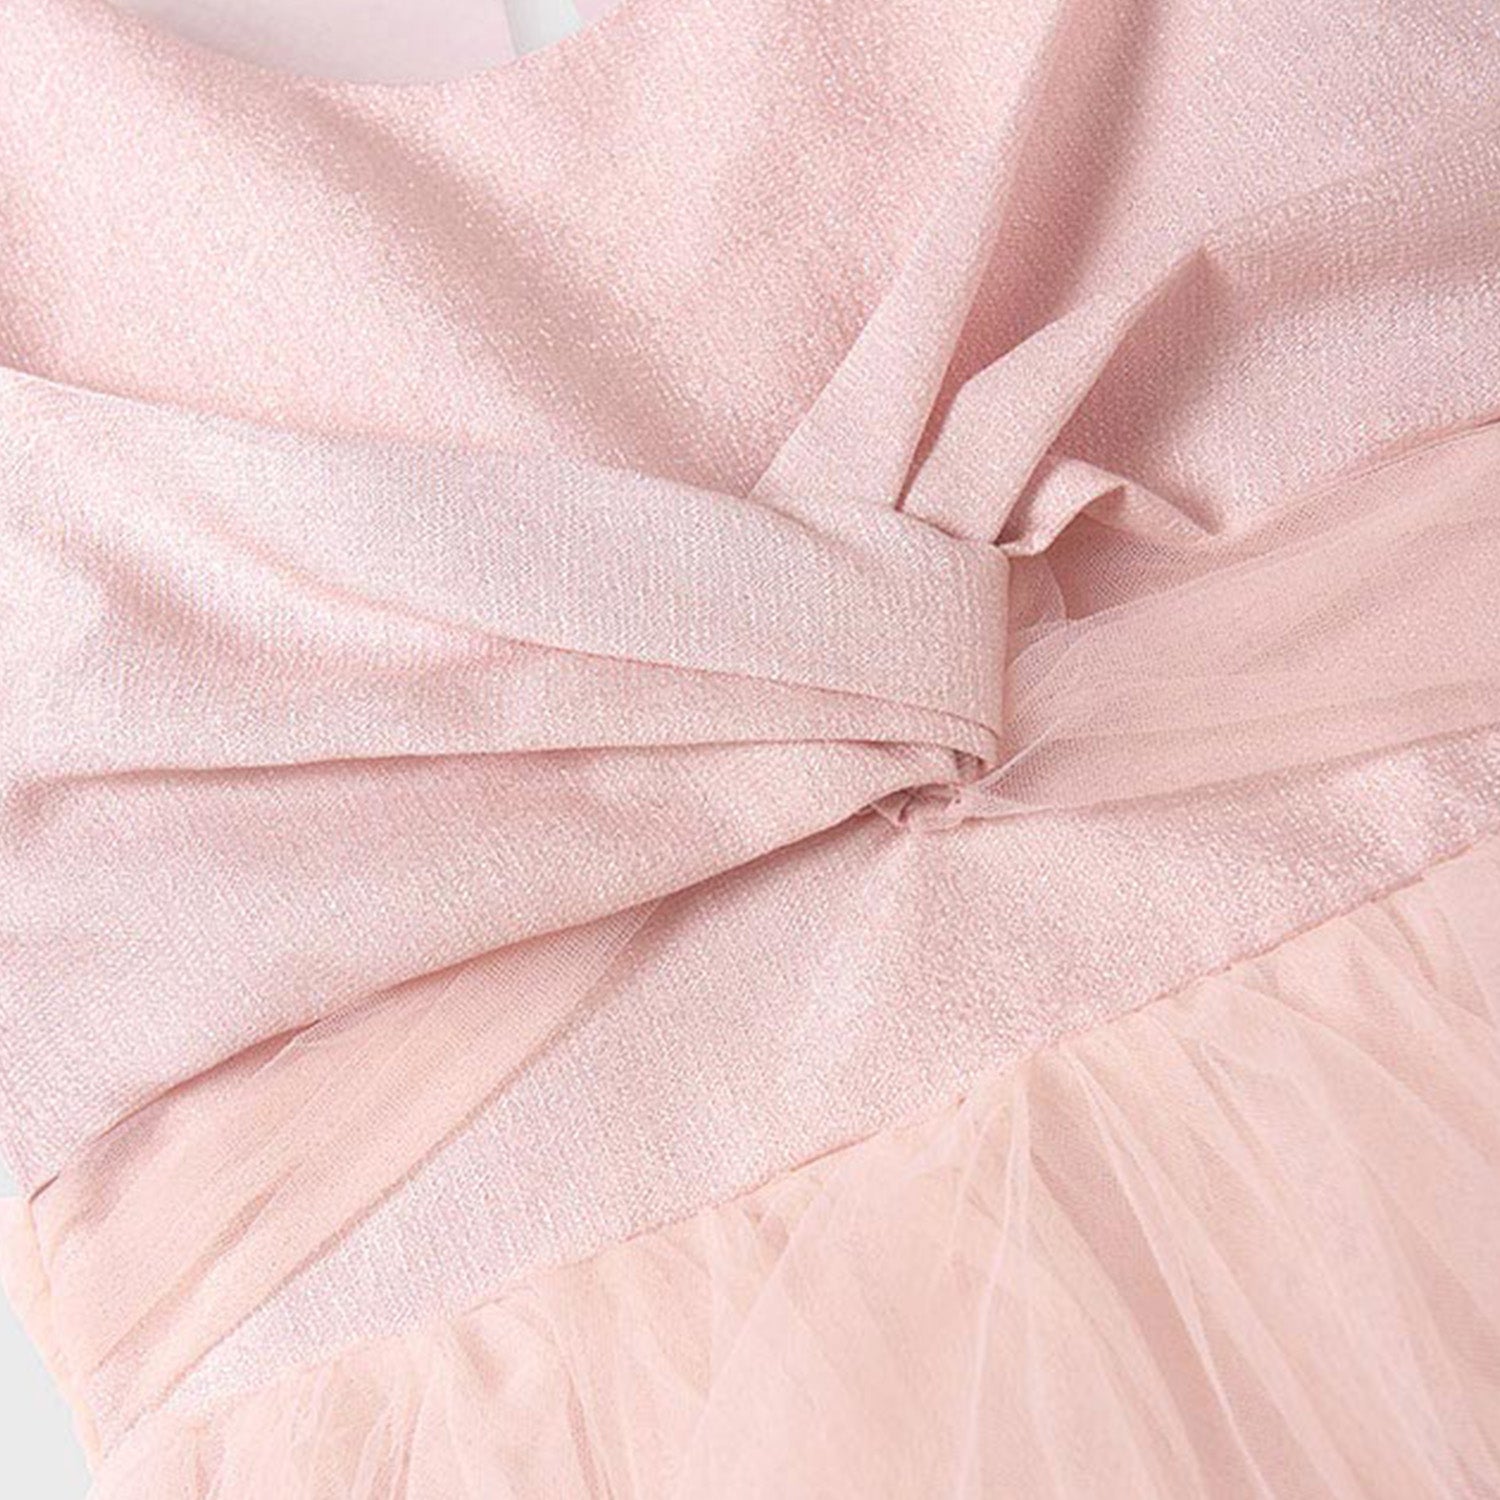 GIrls Pink Shimmer Tulle Dress